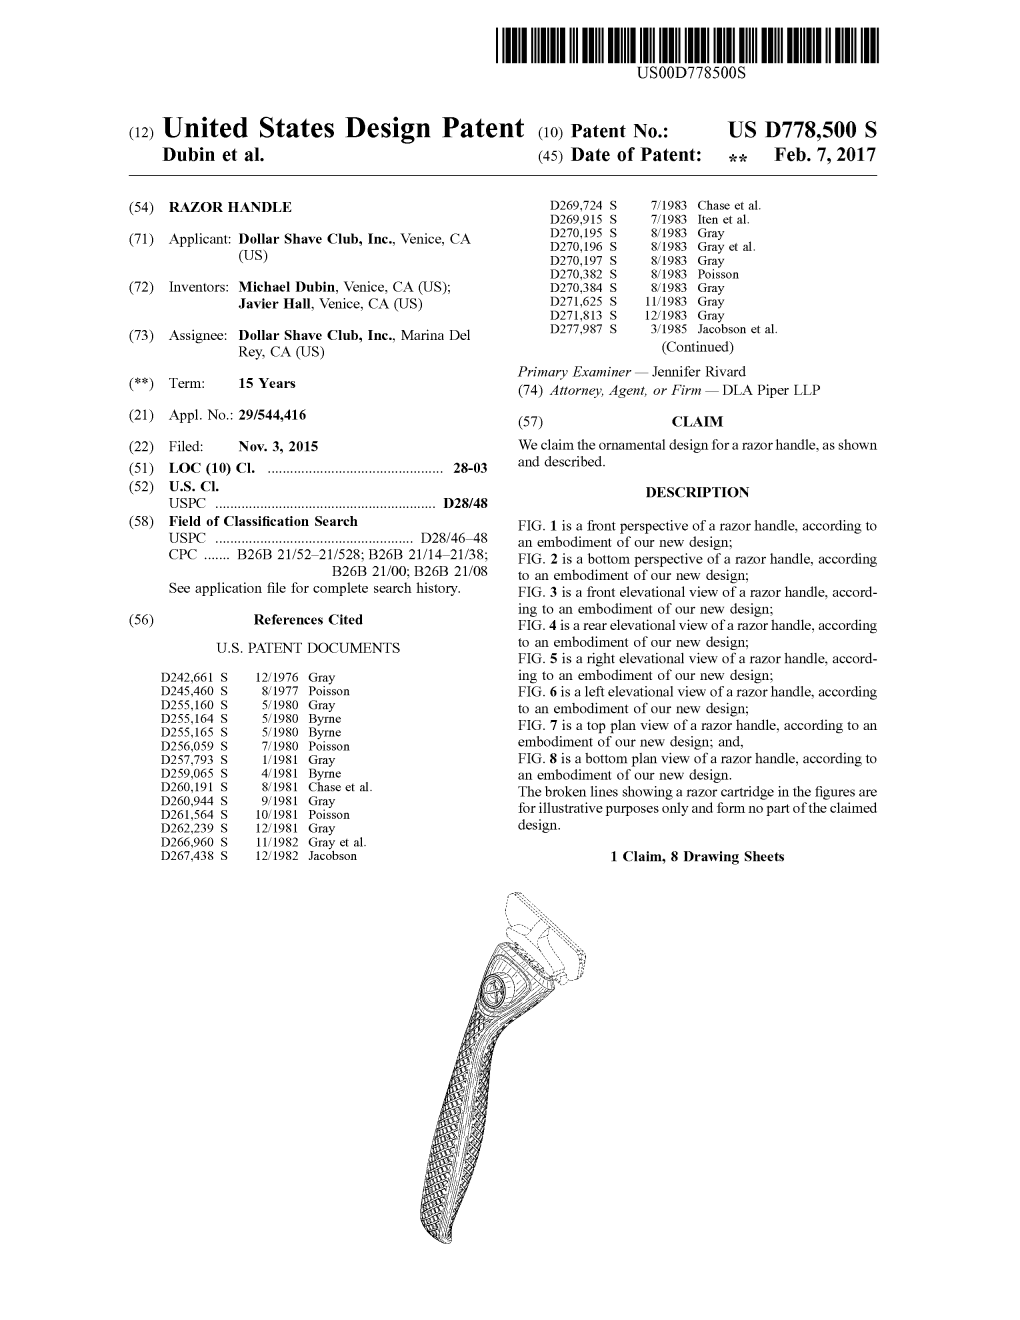 (12) United States Design Patent (10) Patent No.: US D778,500S Dubin Et Al